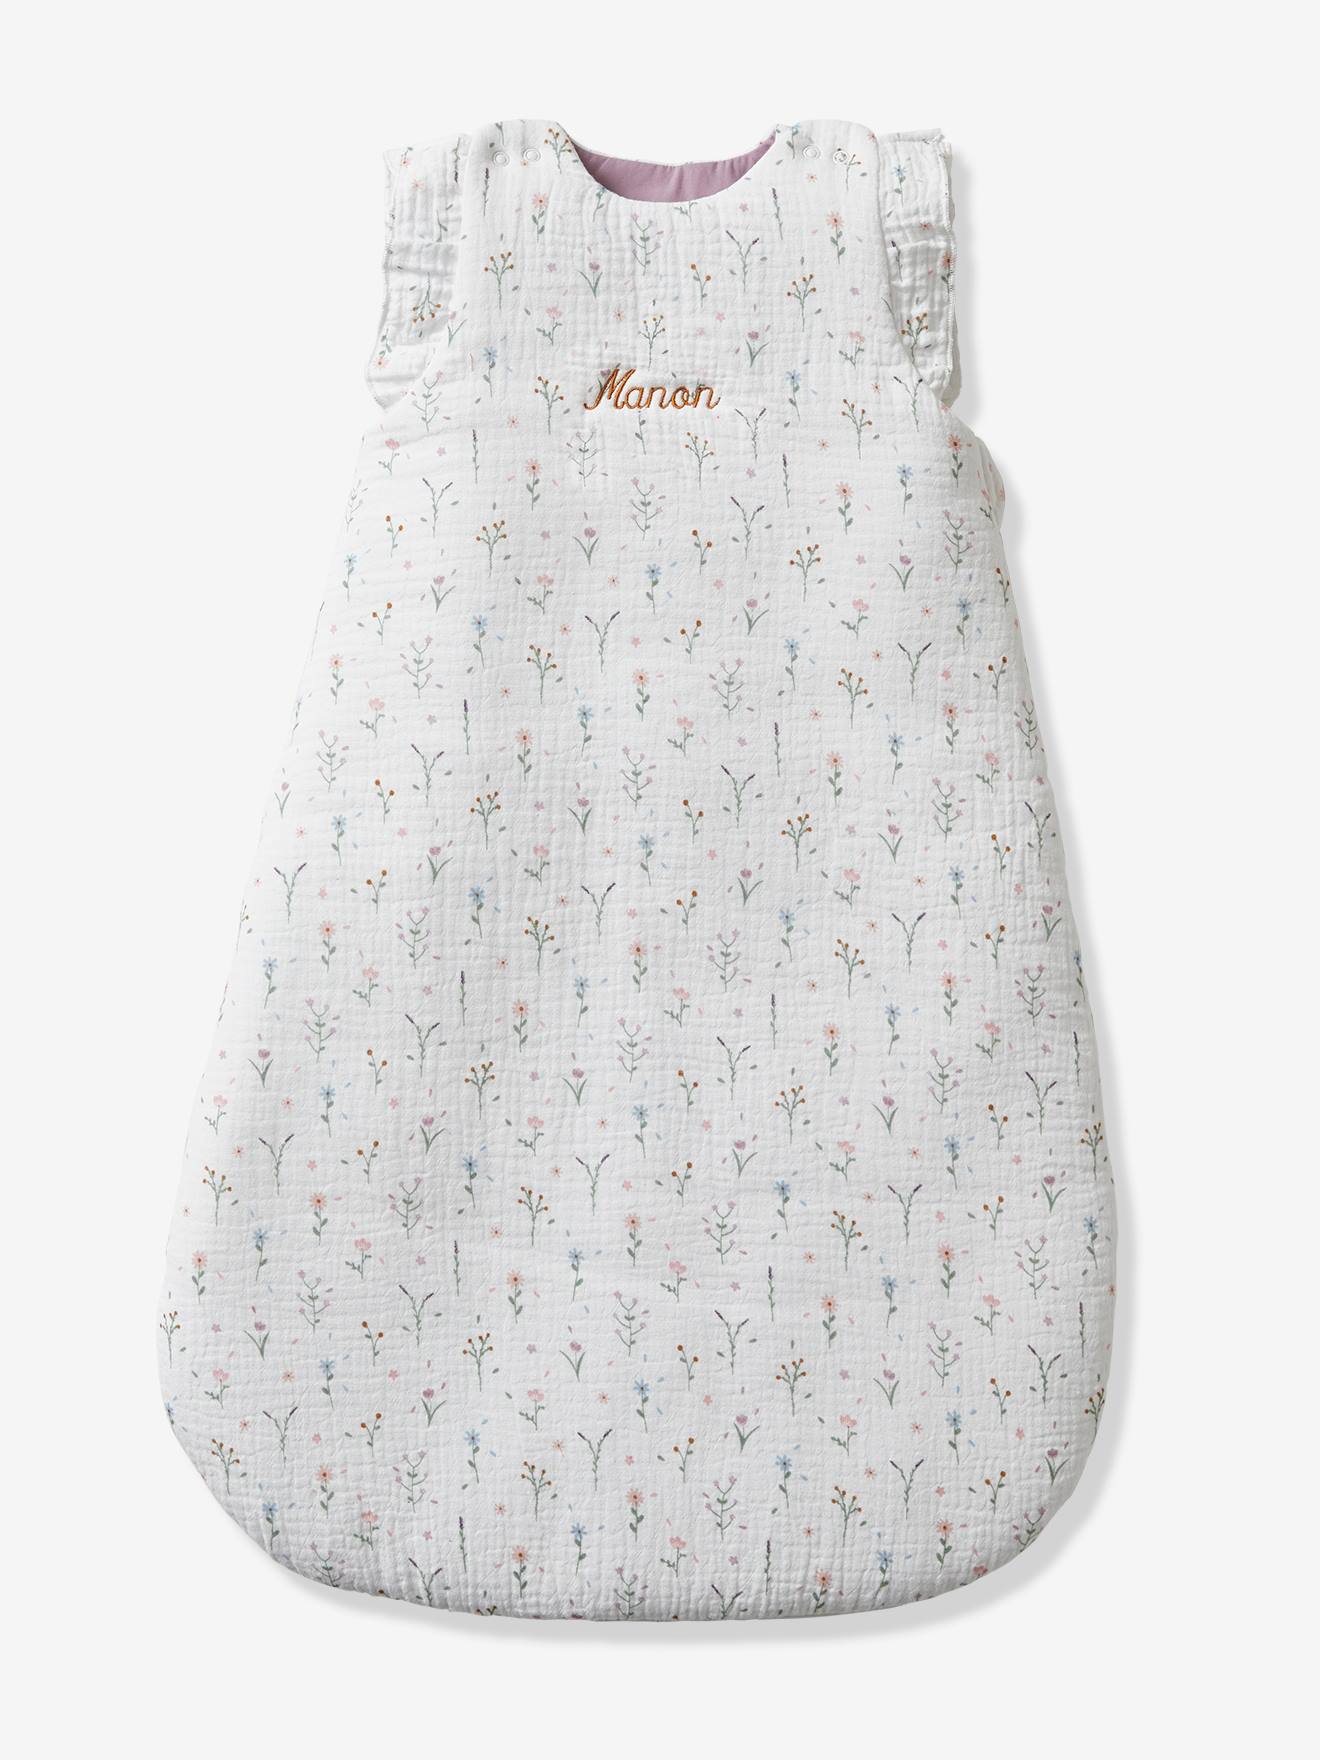 Sleeveless Baby Sleep Bag in Cotton Gauze, Sweet Provence white light all over printed